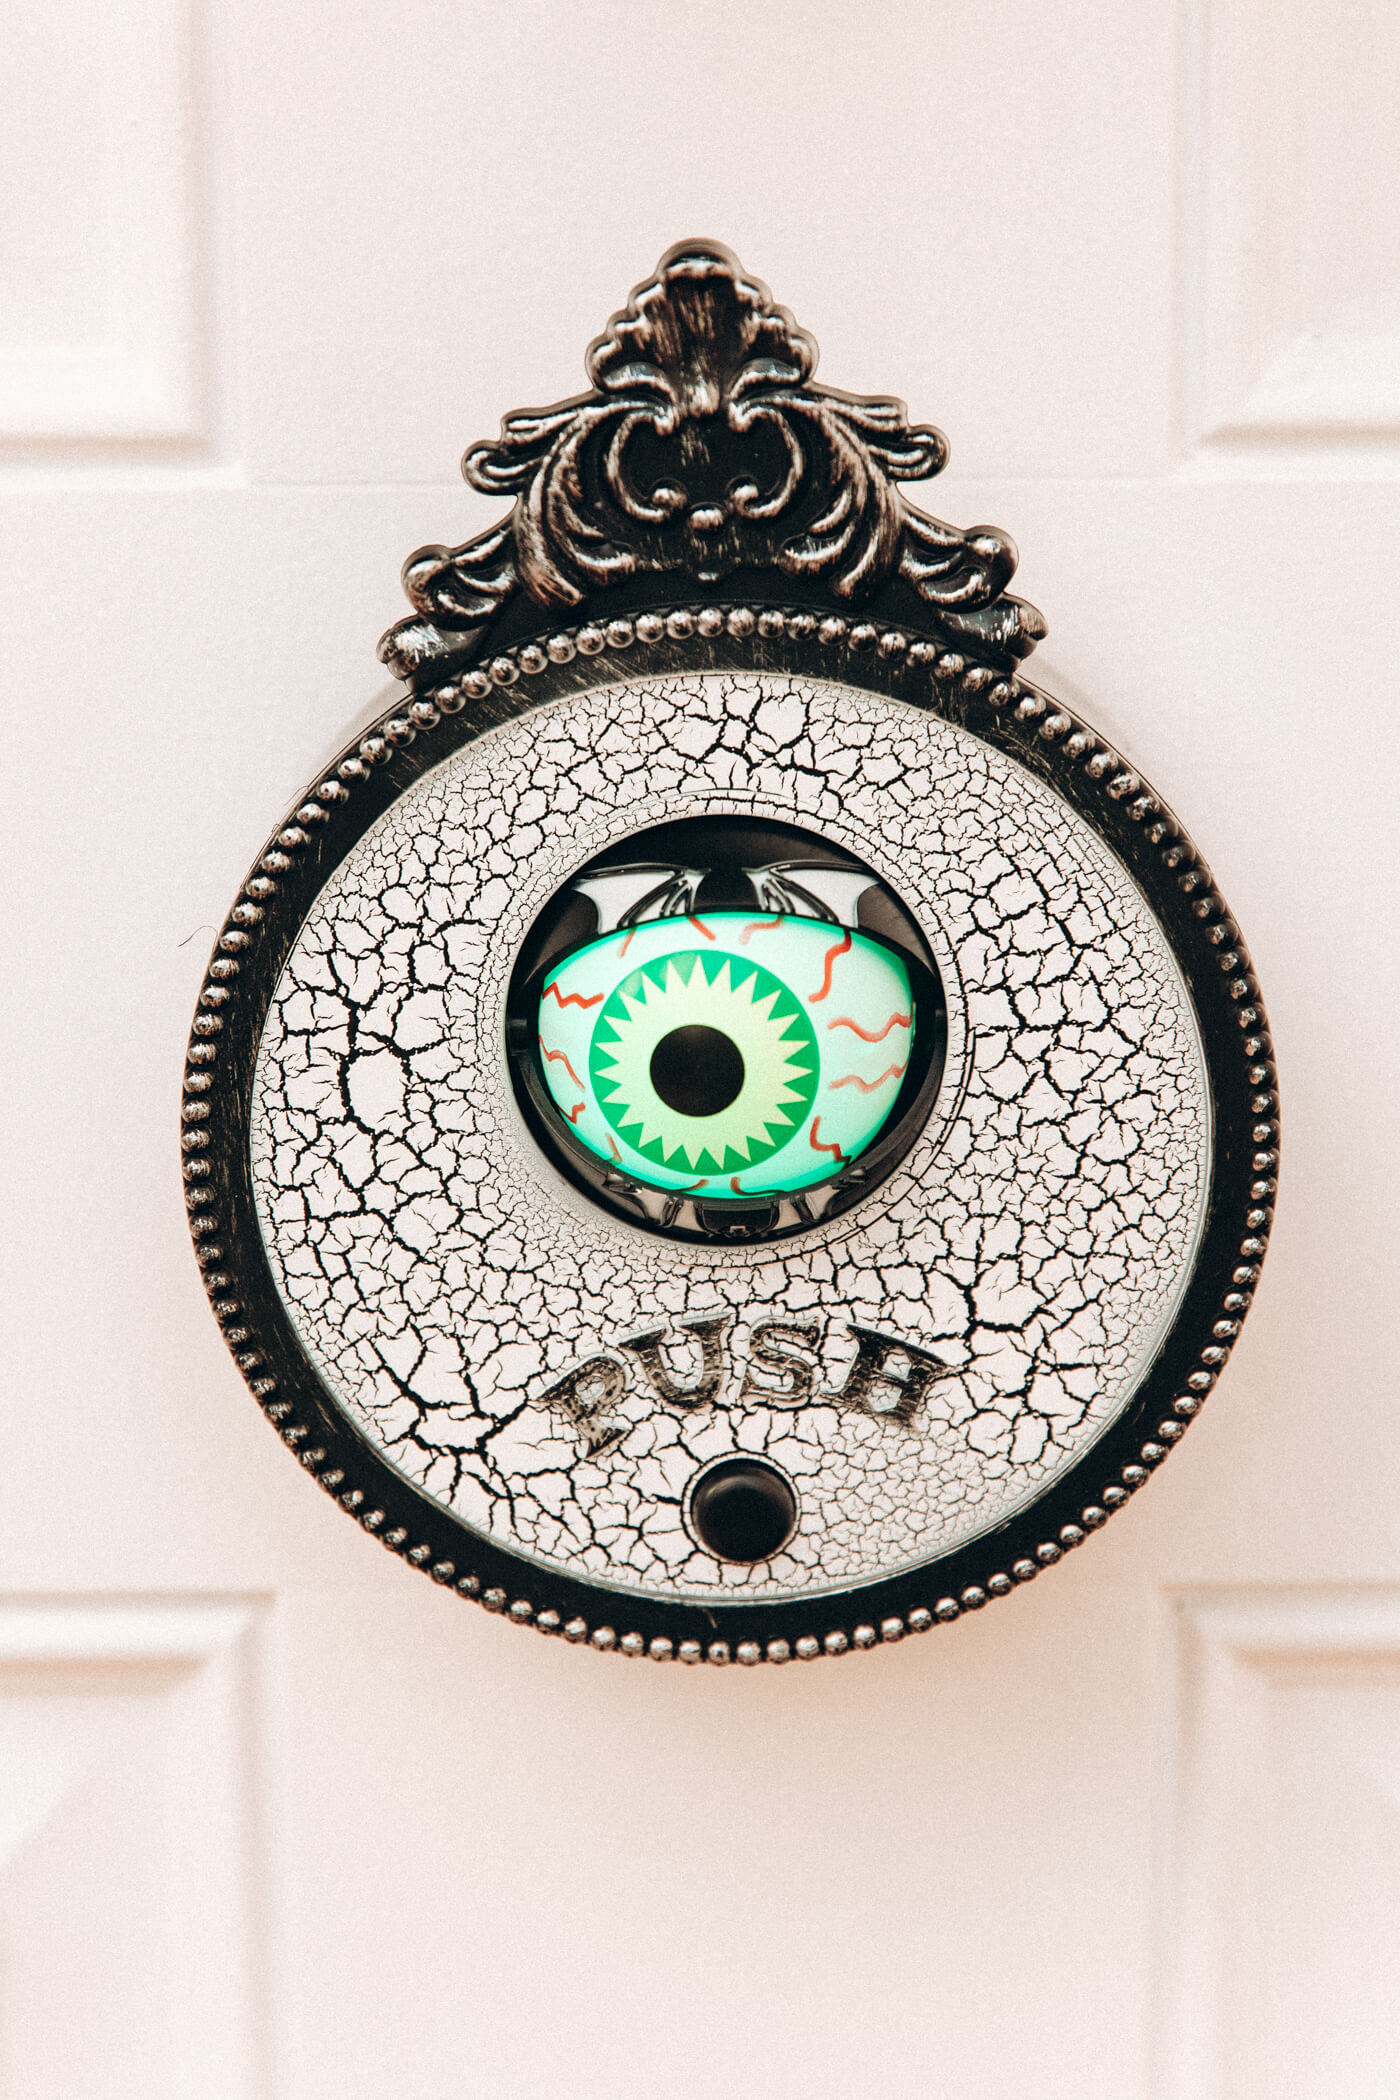 Halloween Exterior Home Decor black eye doorbell